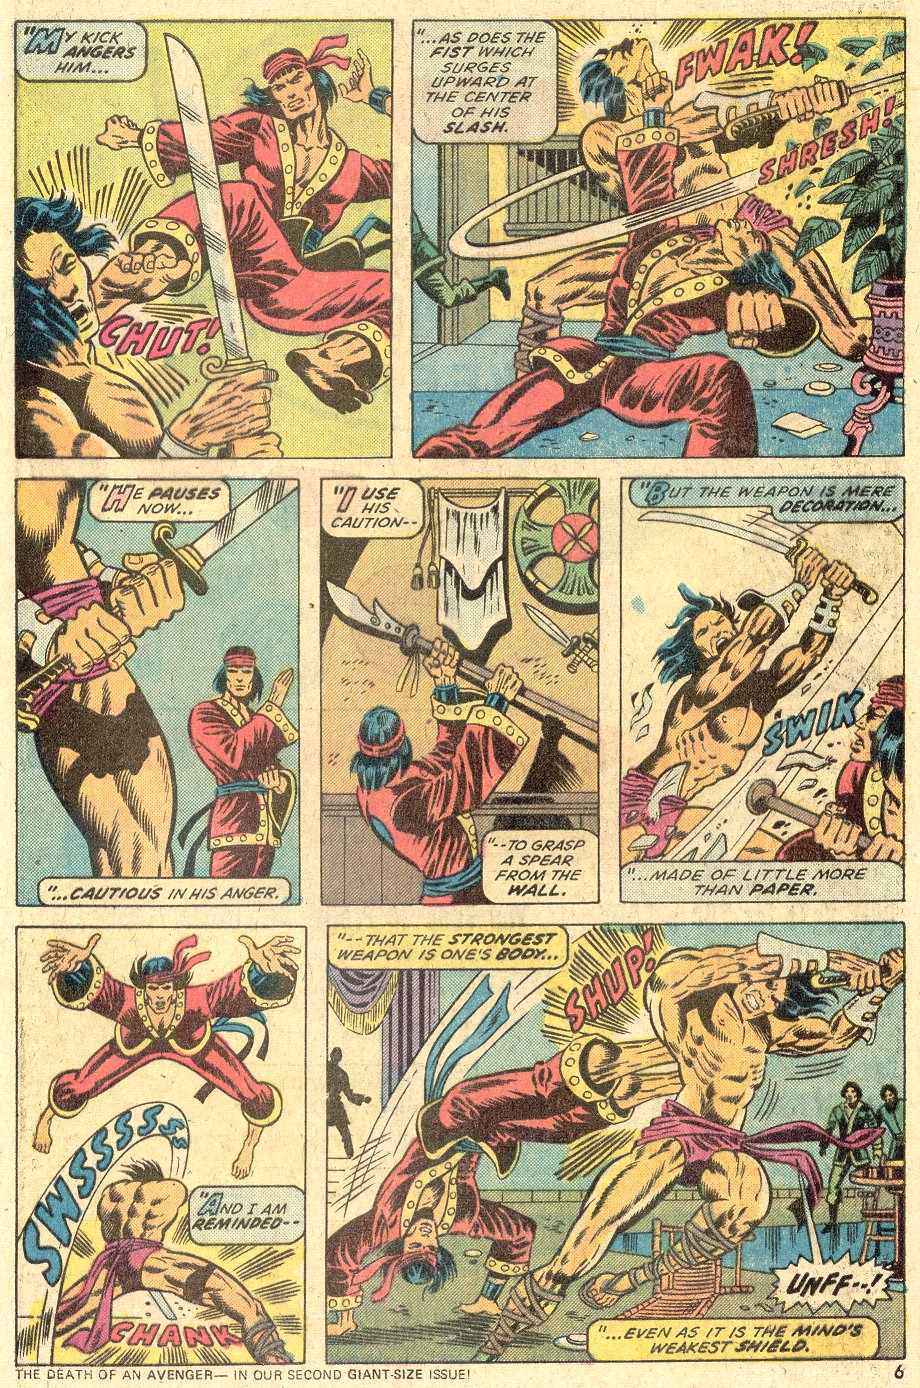 Master of Kung Fu (1974) Issue #22 #7 - English 5